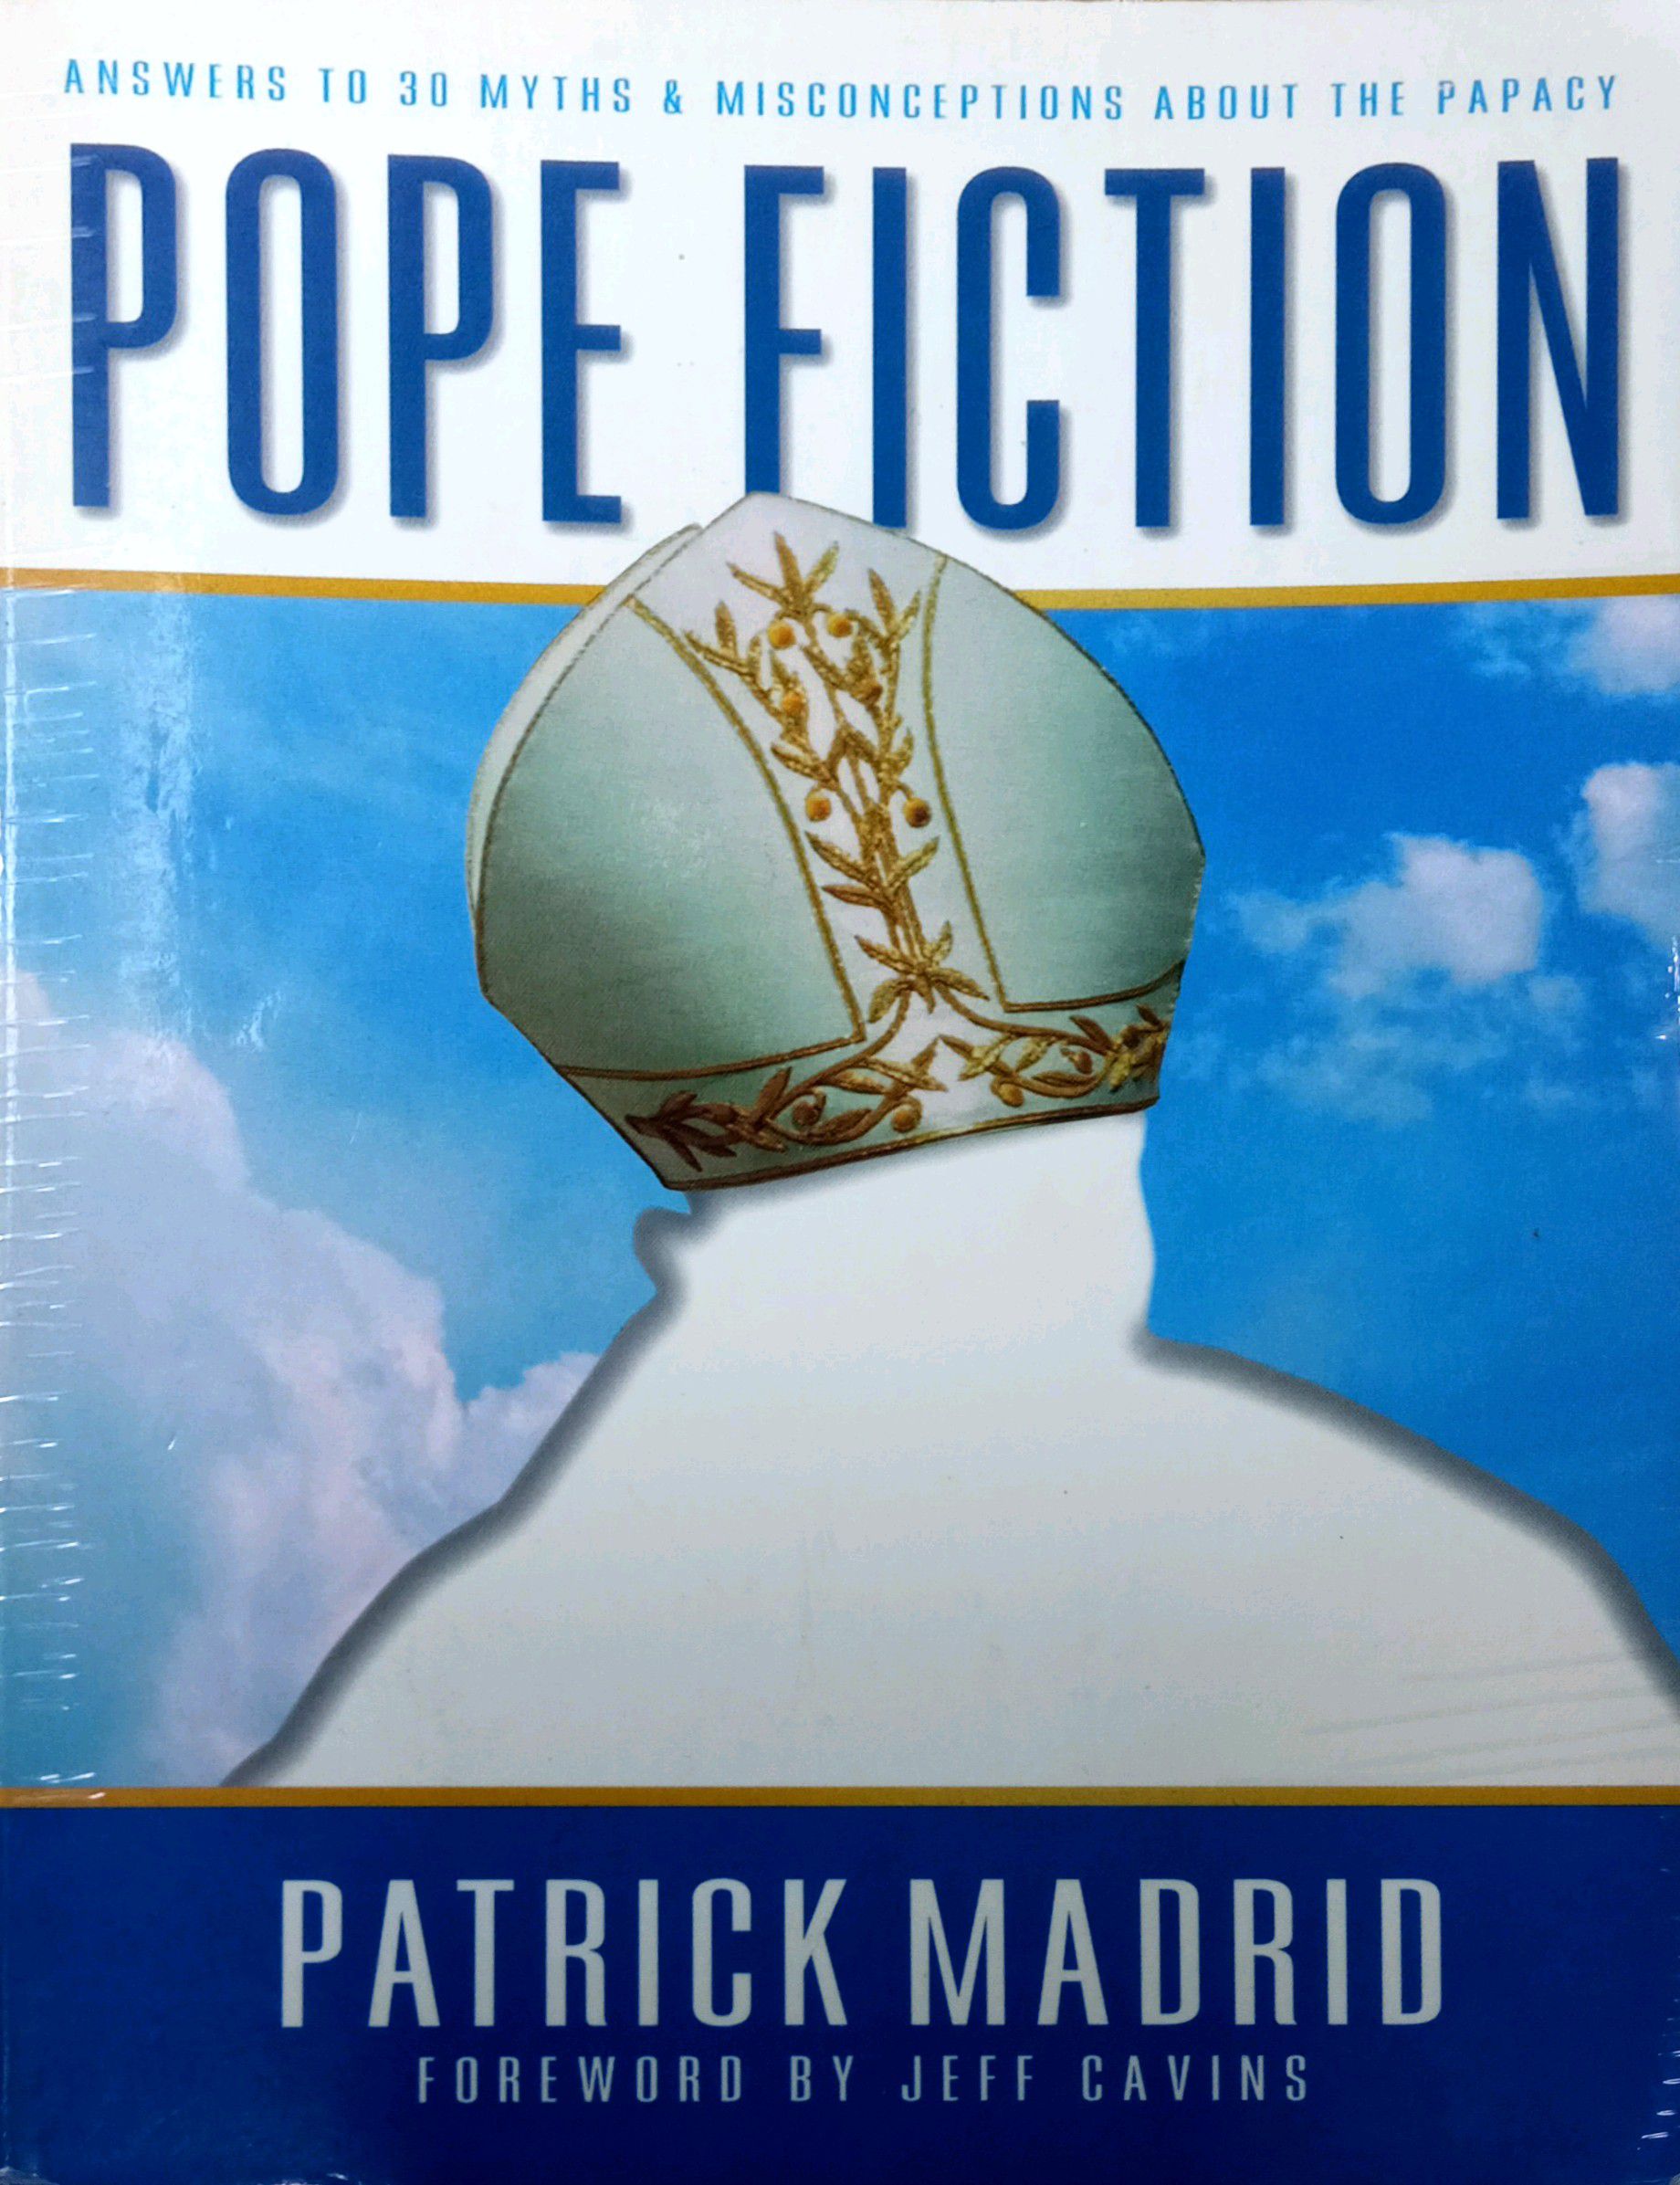 POPE FICTION